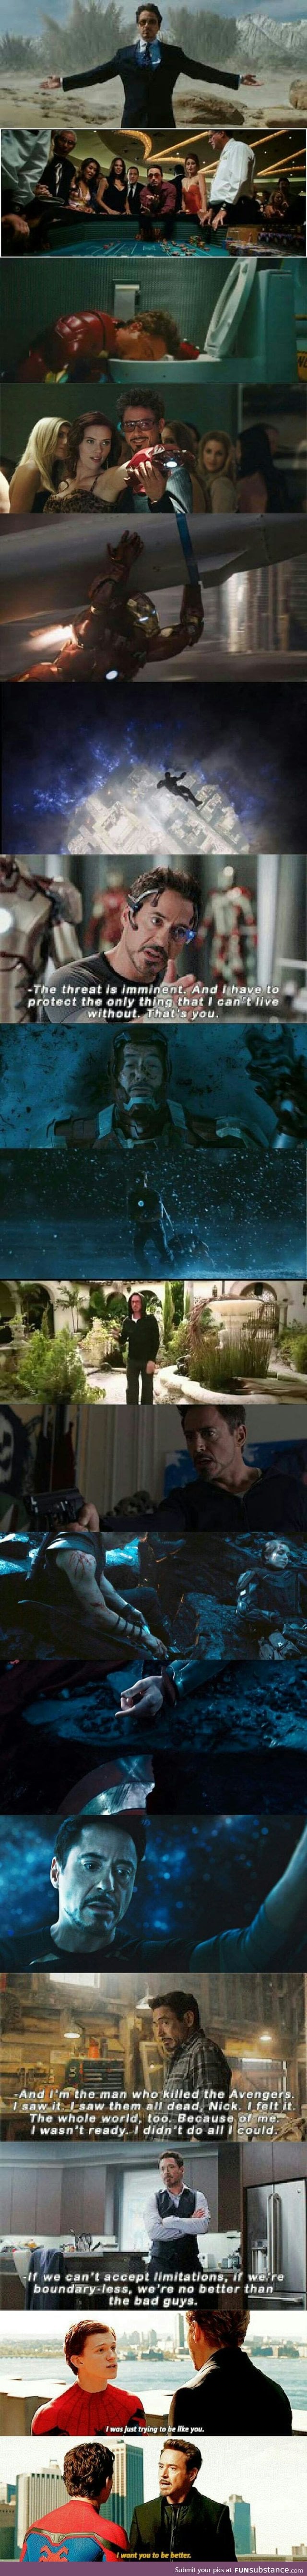 Tony Stark's character development